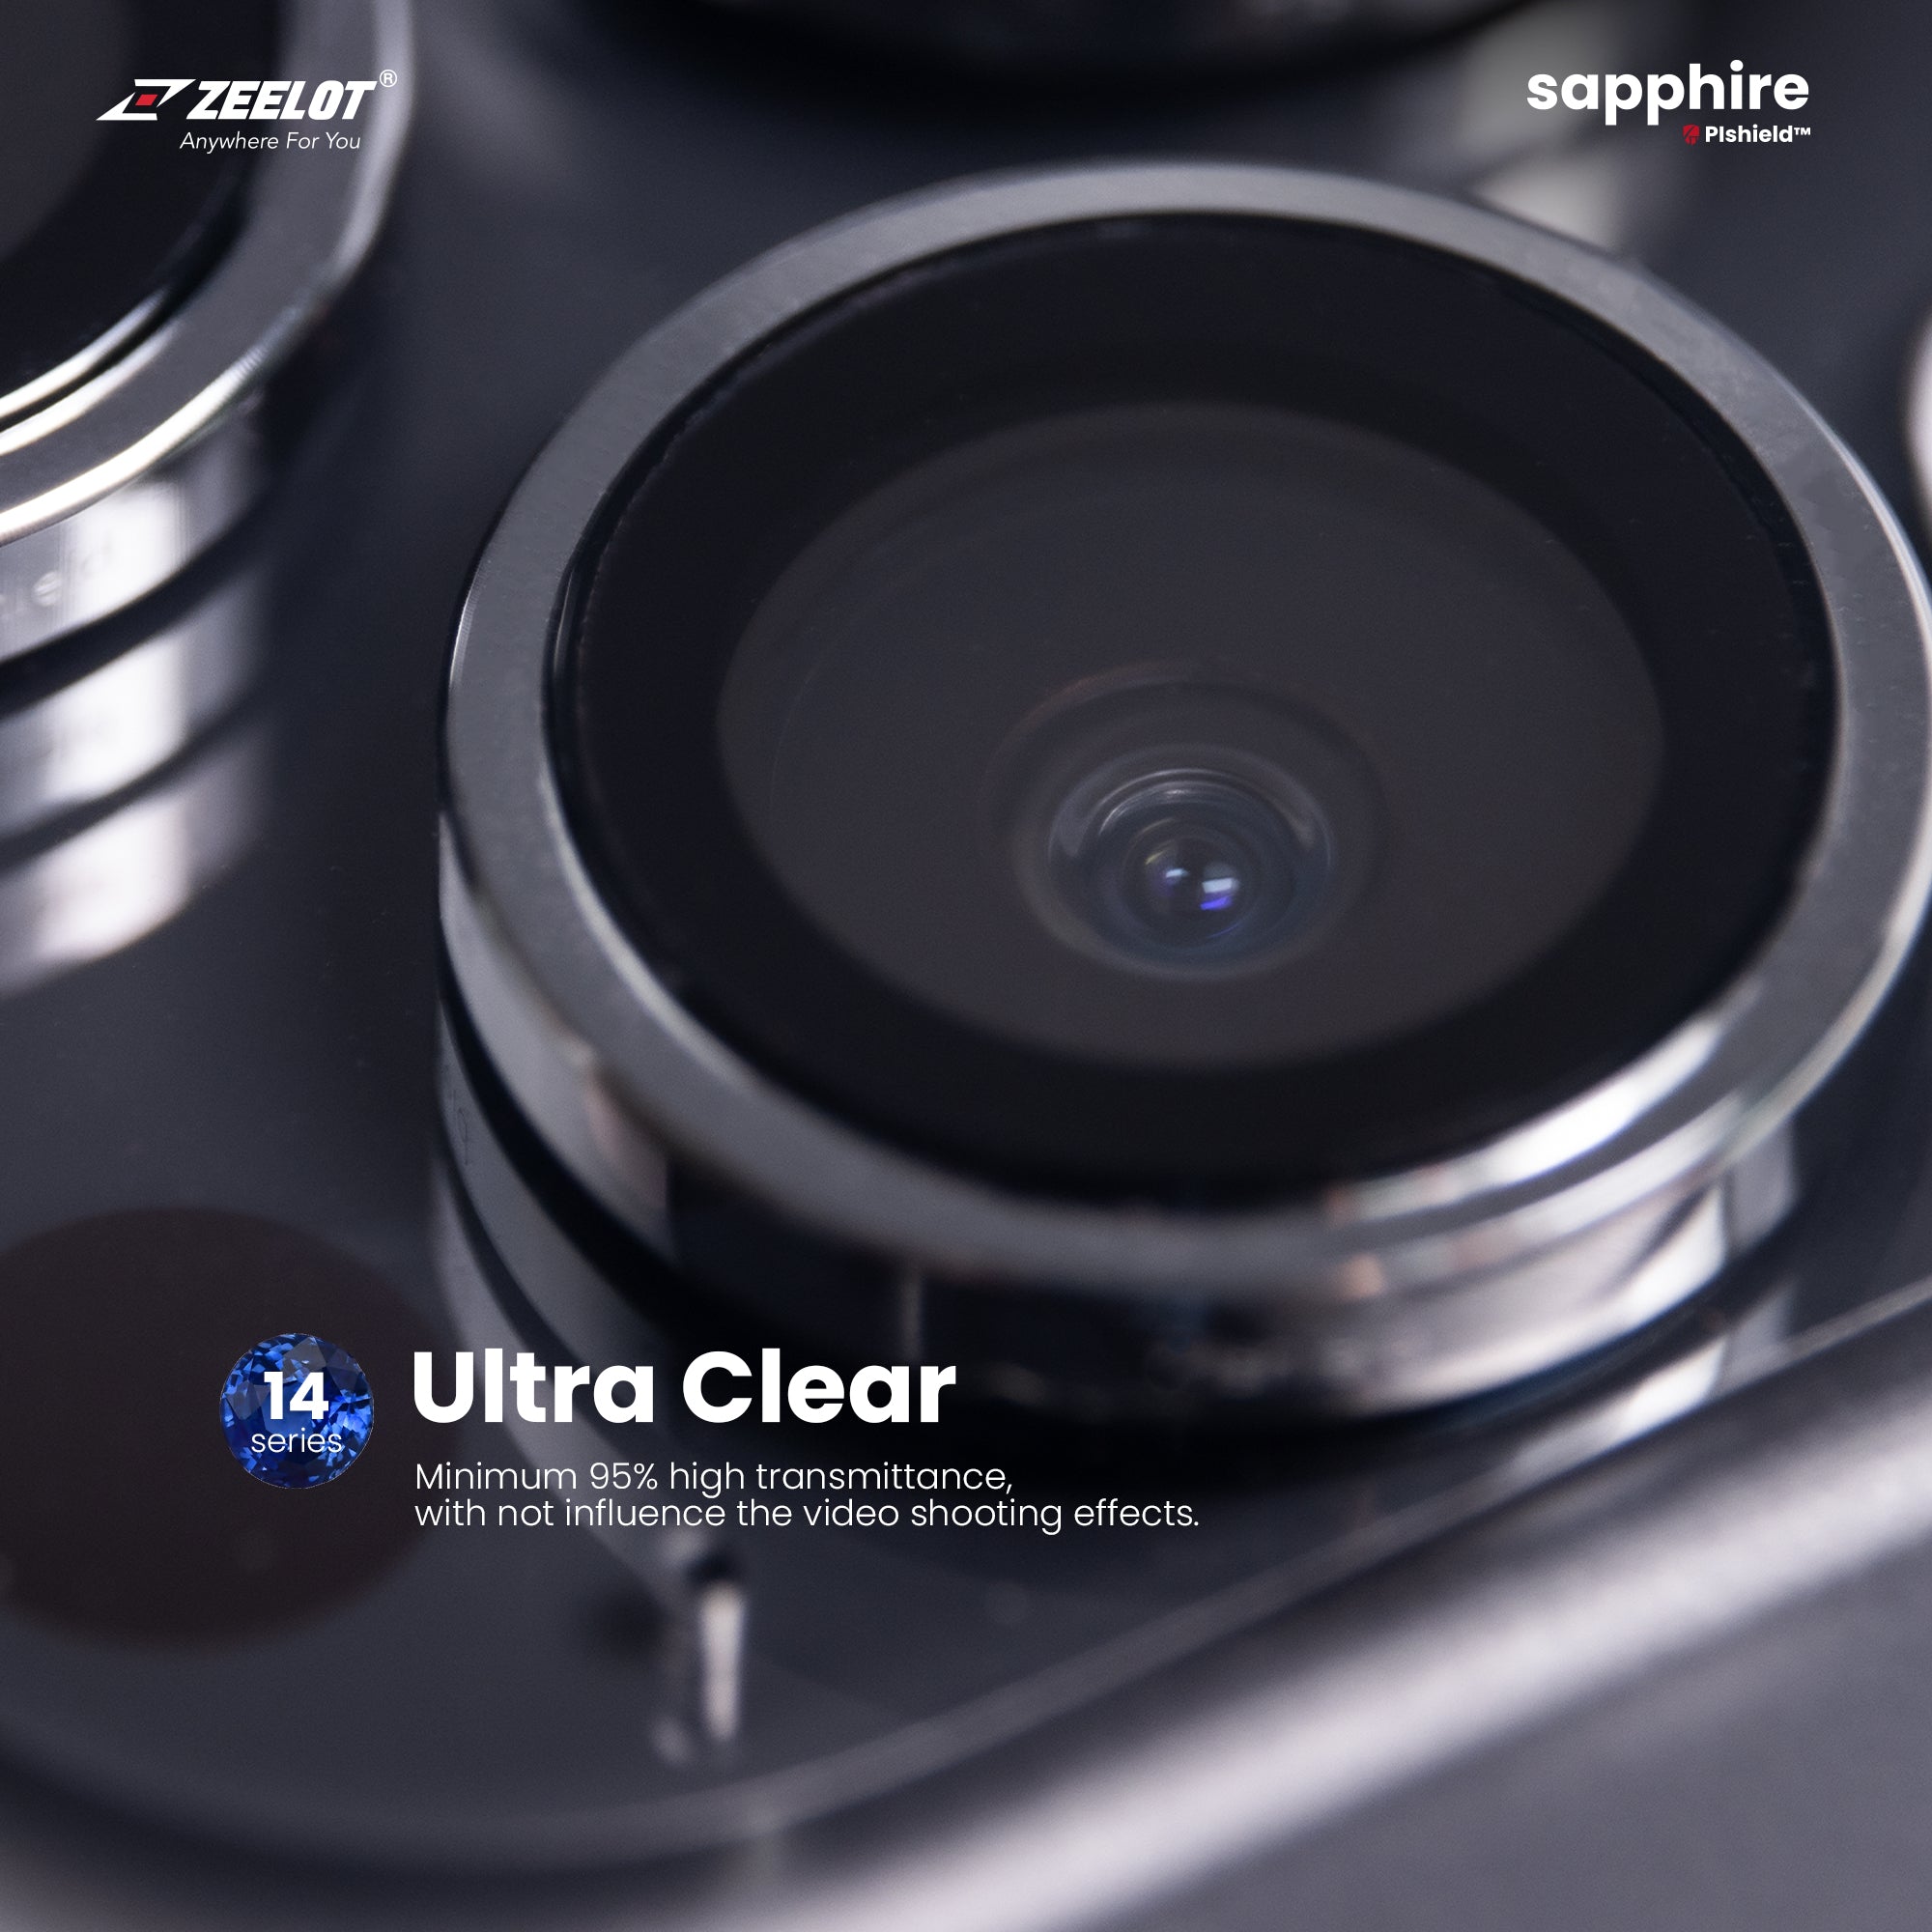 ZEELOT PIshield Sapphire Titanium Alloy Lens for iPhone 14 Series ONE2WORLD 